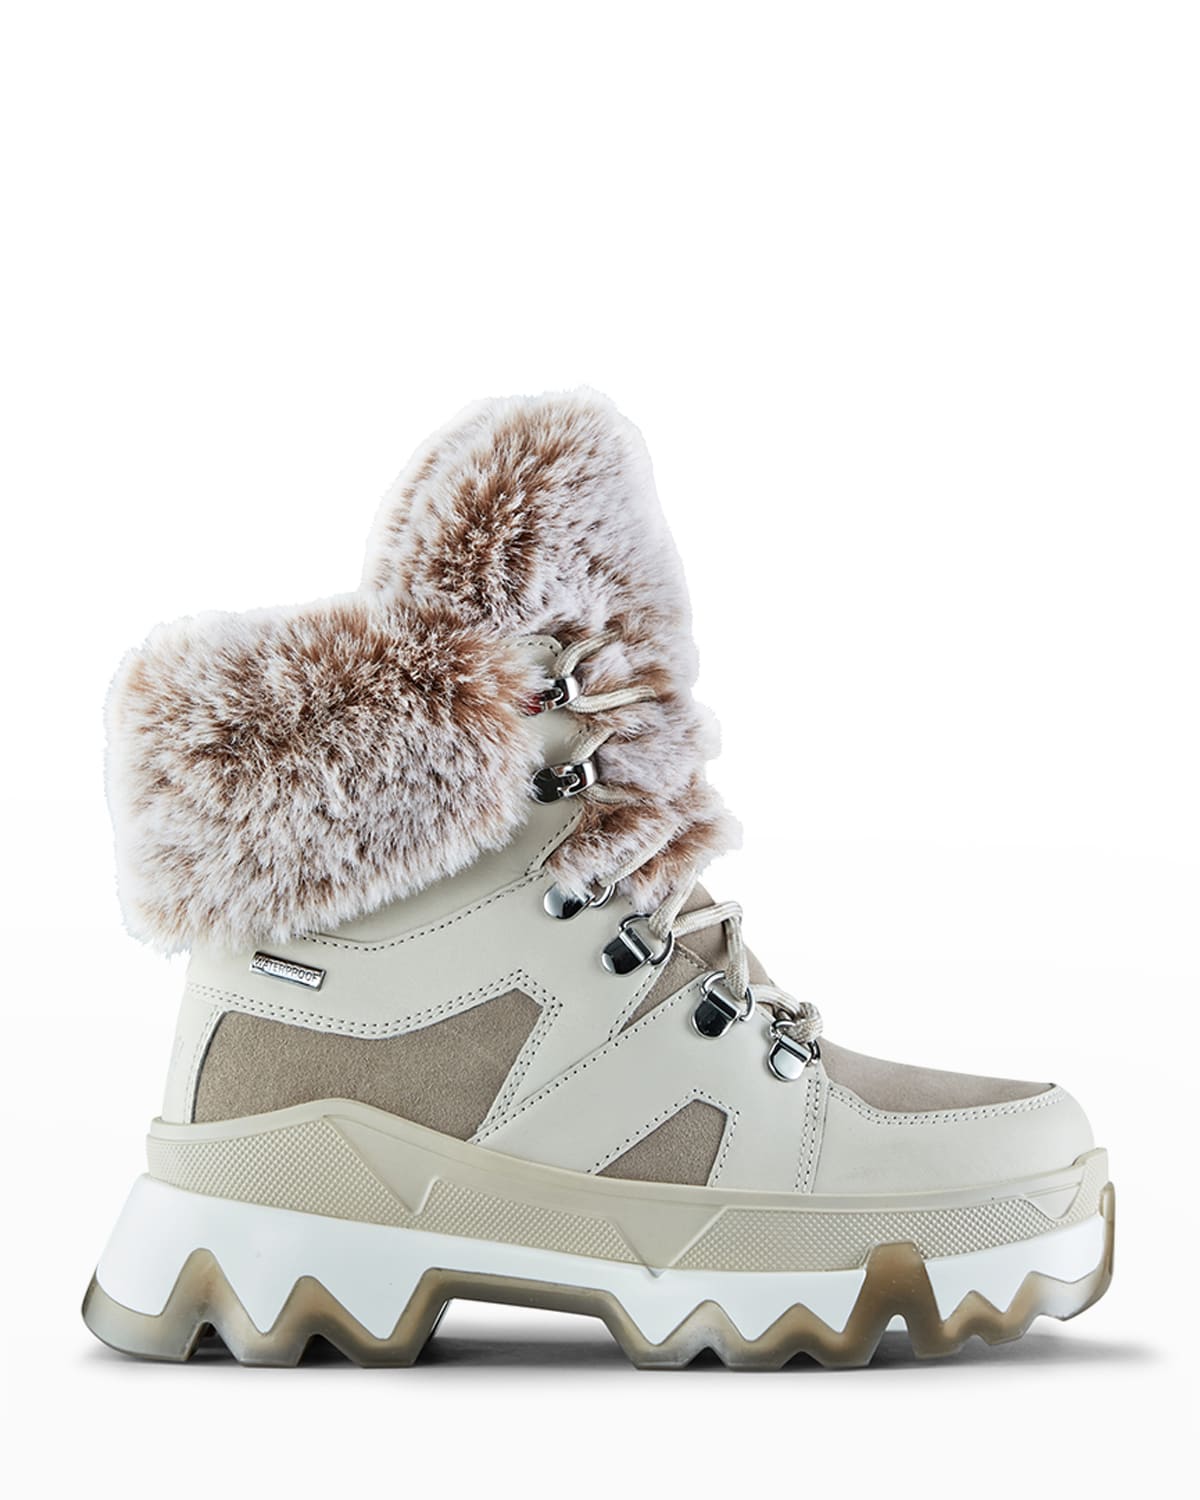 Cougar Warrior Mix-Leather Snow Boots w/ Faux-Fur Trim